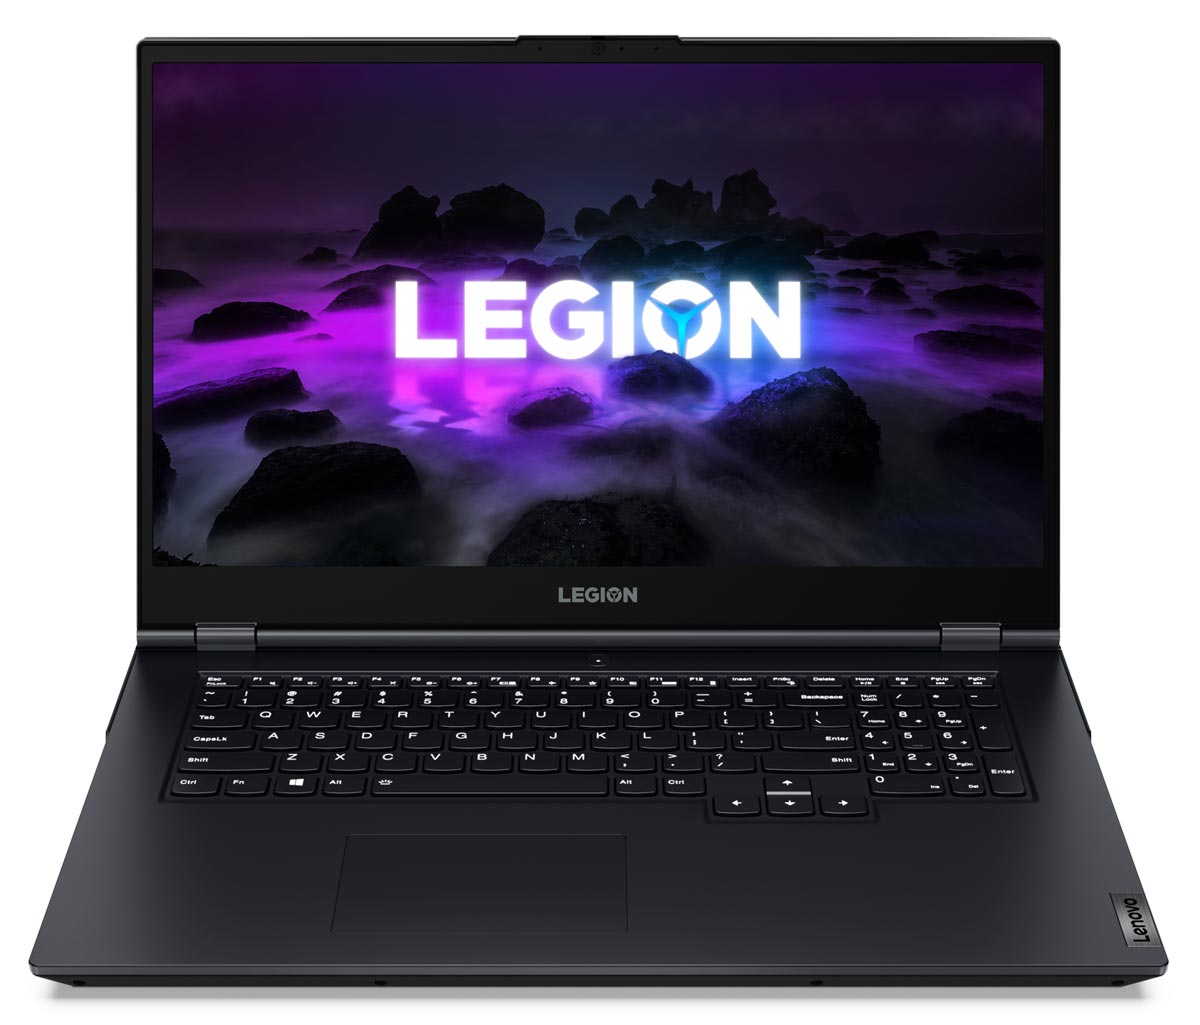 Lenovo Legion 5 (17.3") gaming laptop